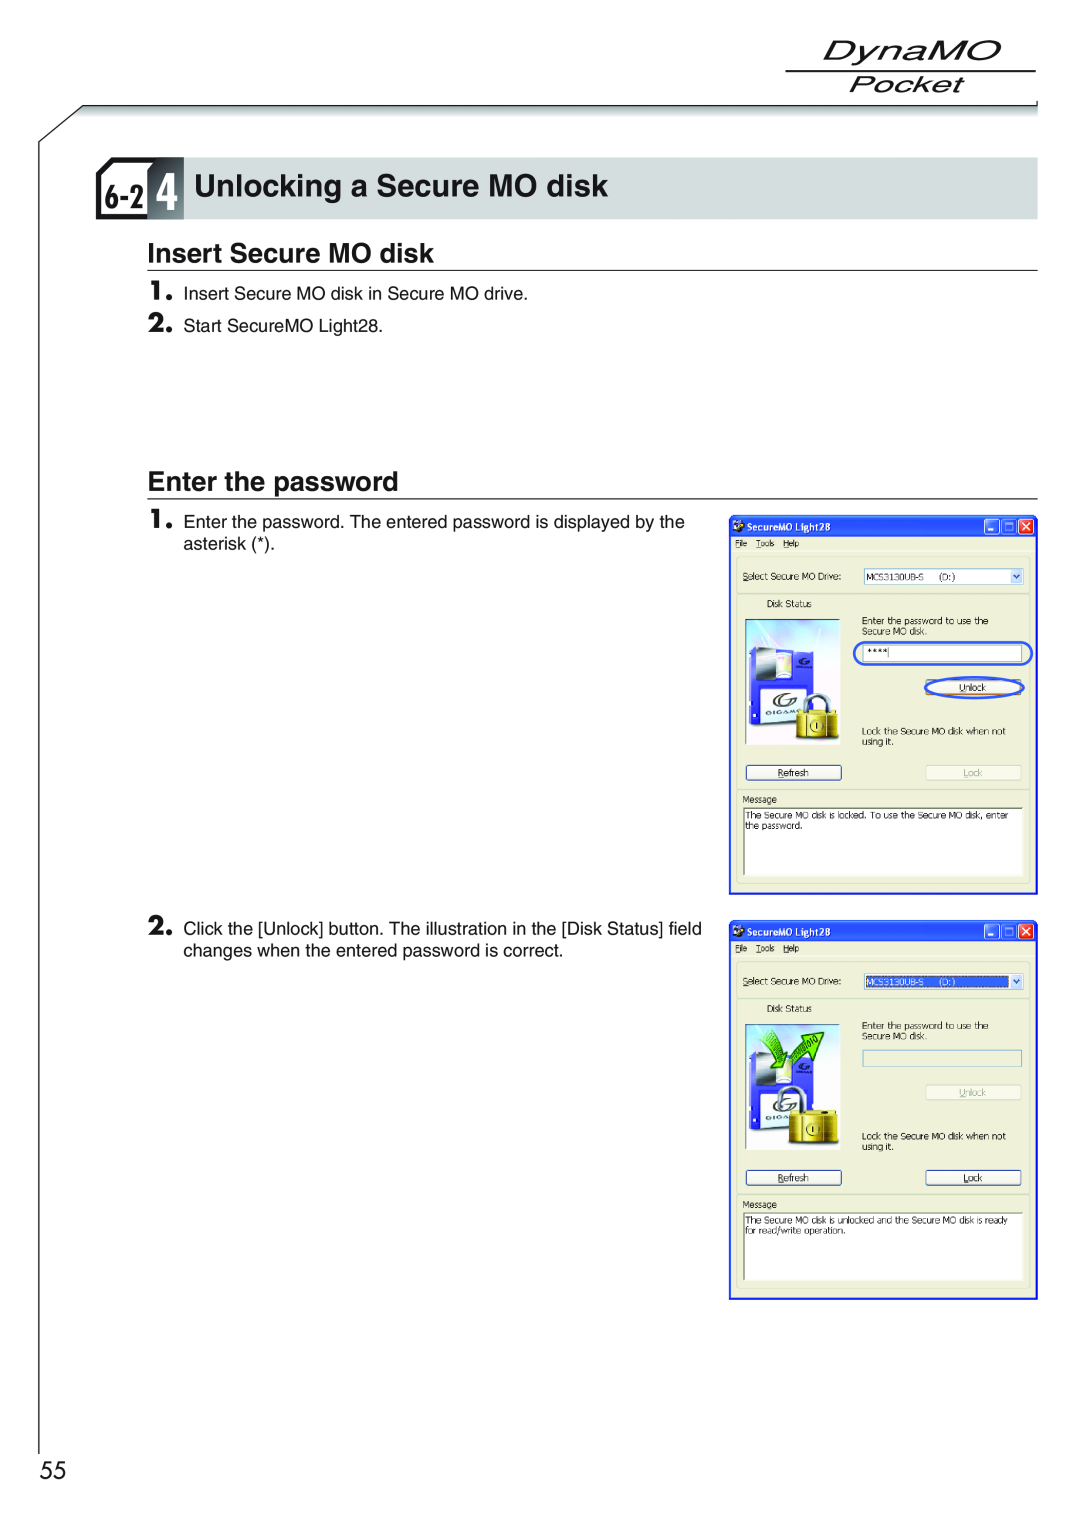 Fujitsu 1300U2 user manual 6-2 4 Unlocking a Secure MO disk, Insert Secure MO disk, Enter the password 